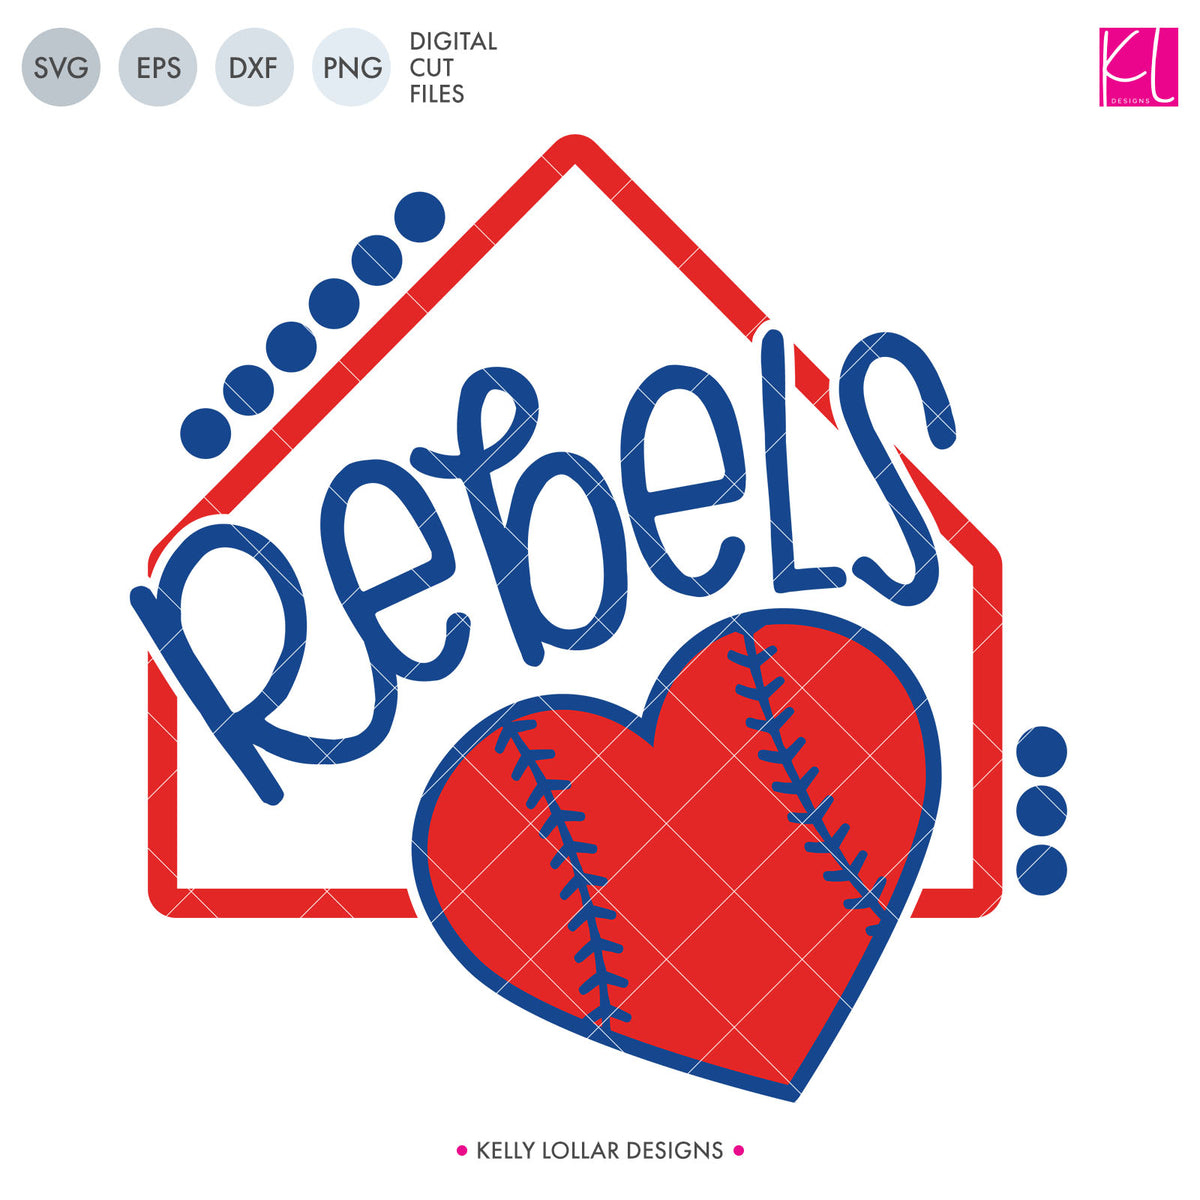 Rebels Baseball &amp; Softball Bundle | SVG DXF EPS PNG Cut Files